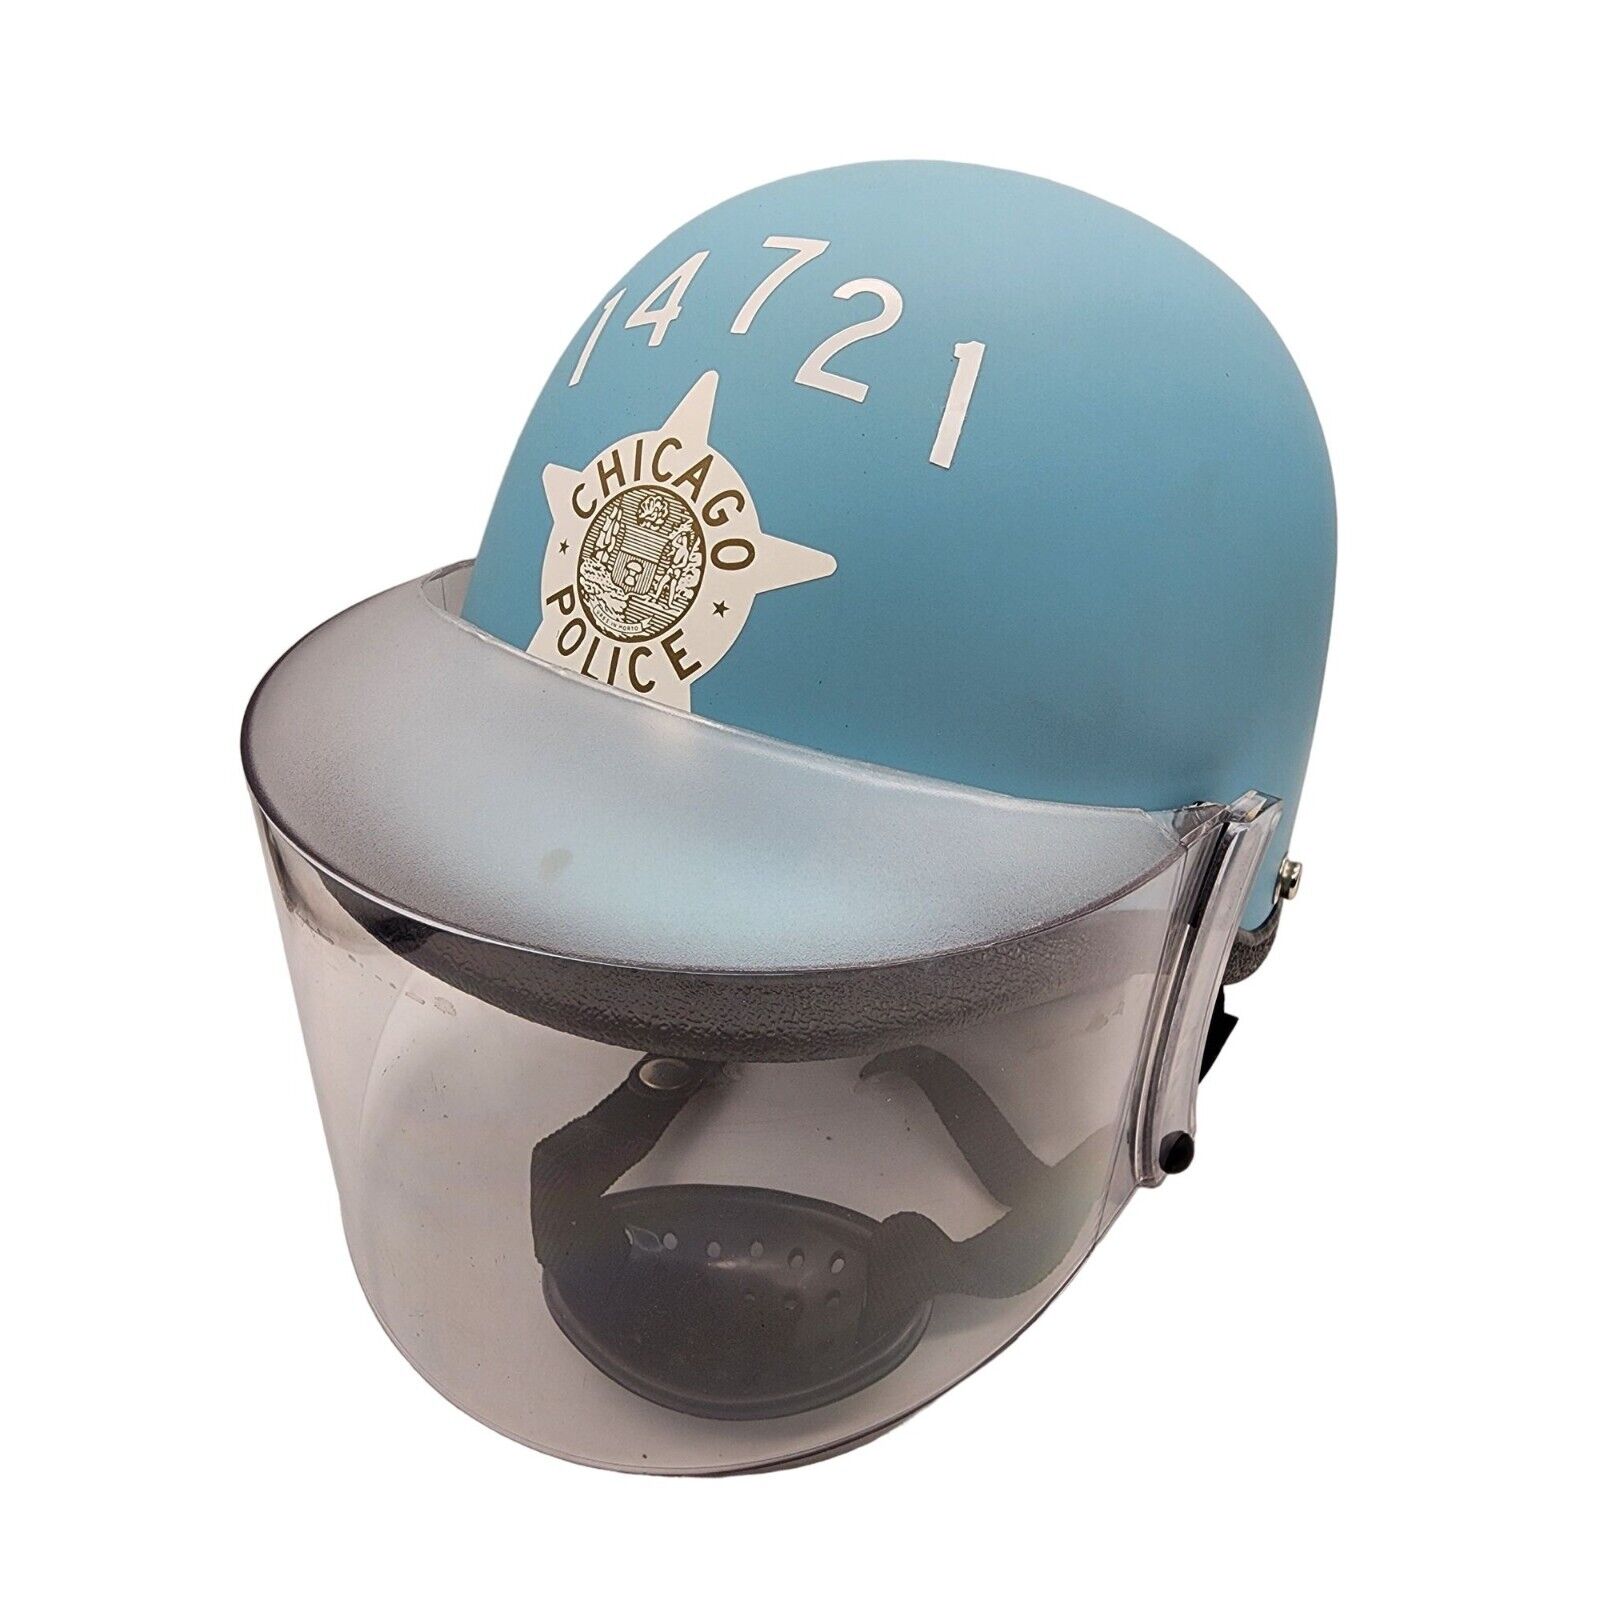 vtg circa 1970s Chicago Police Riot Helmet Visor w Bag Neck Protect wow